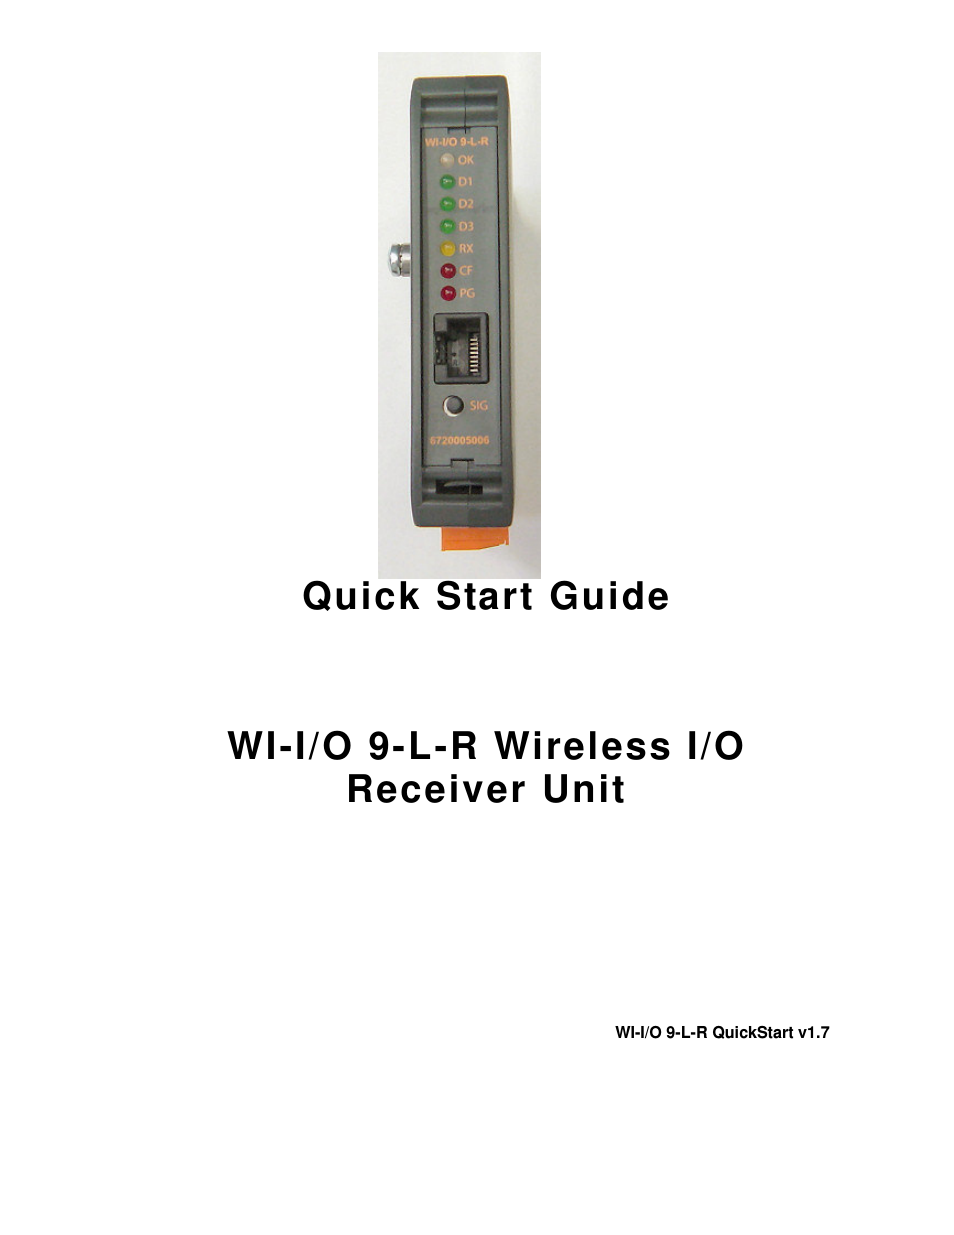 WI-I/O 9-L-R: Wireless I/O Receiver Quick Start Guide v1.7